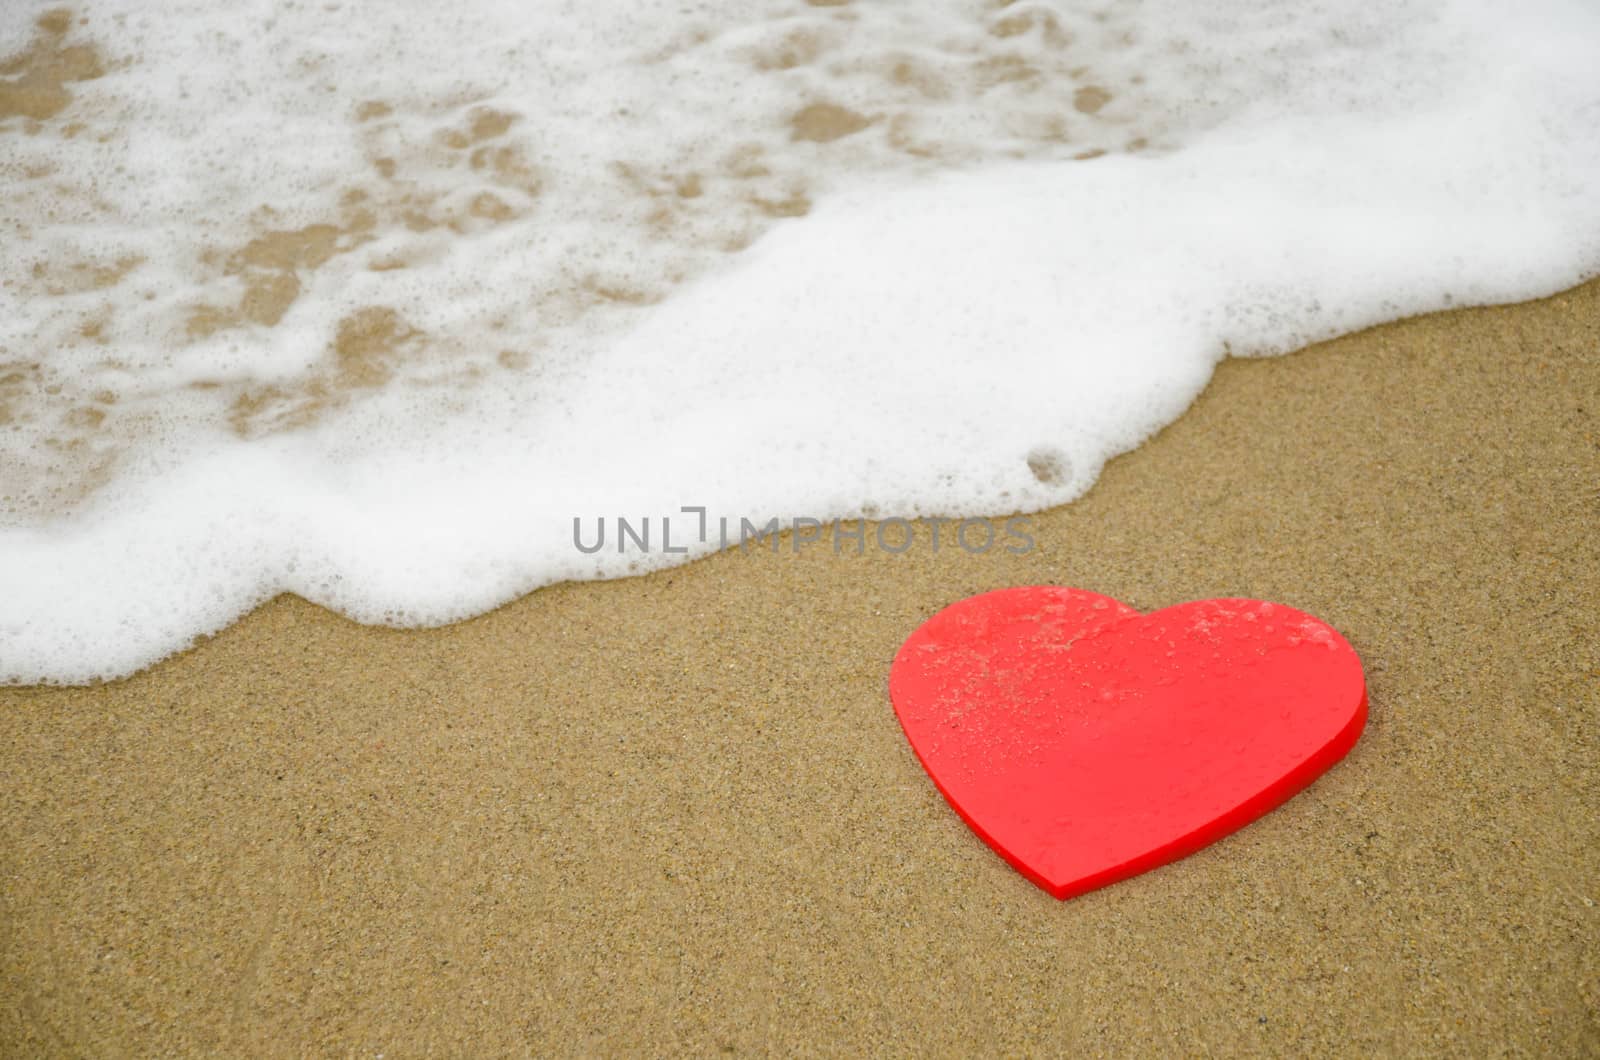 Red Heart shape on sandy beach by ocean's wave